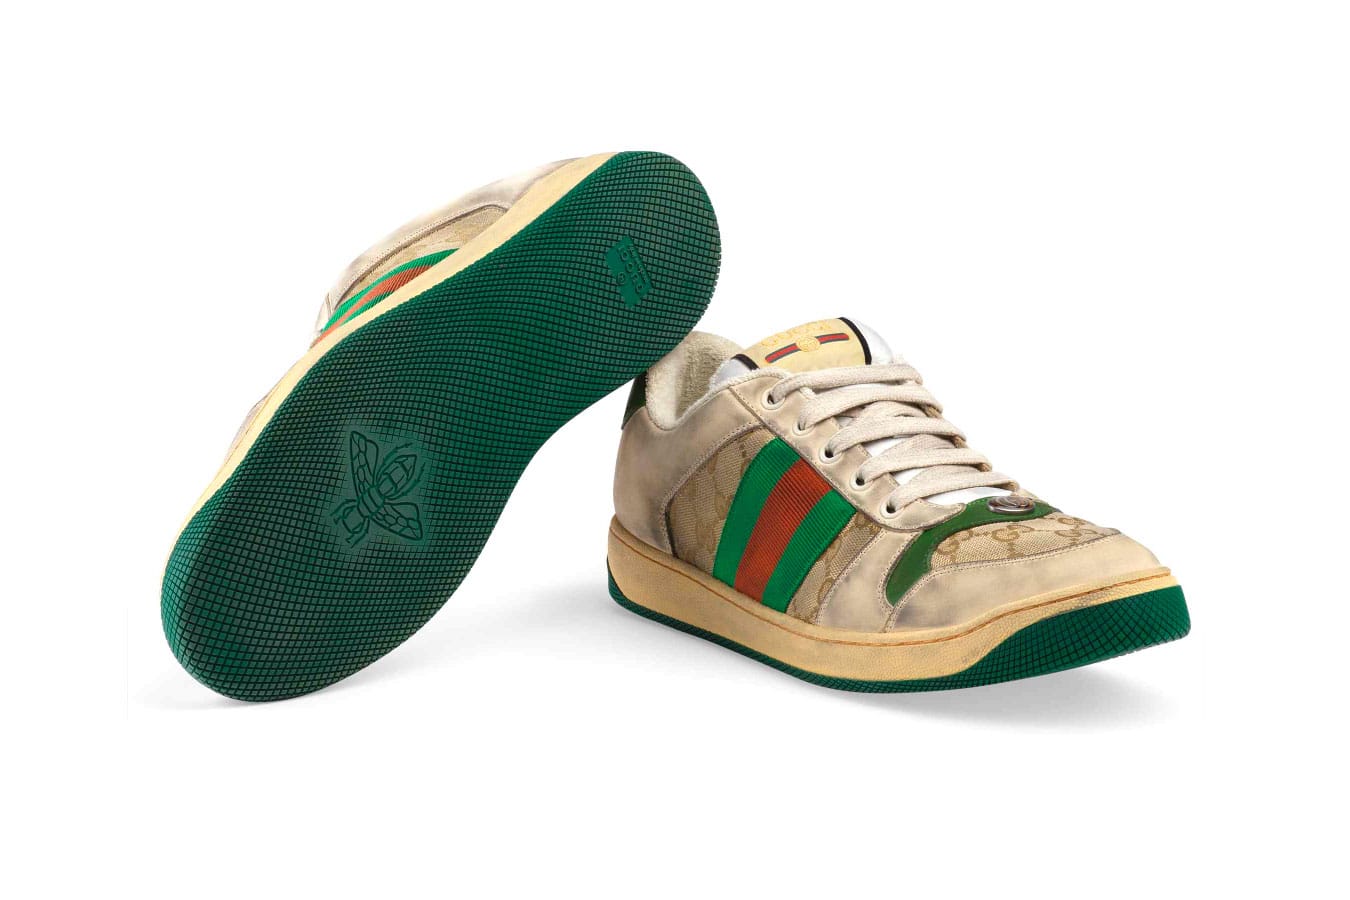 vintage gucci sneakers